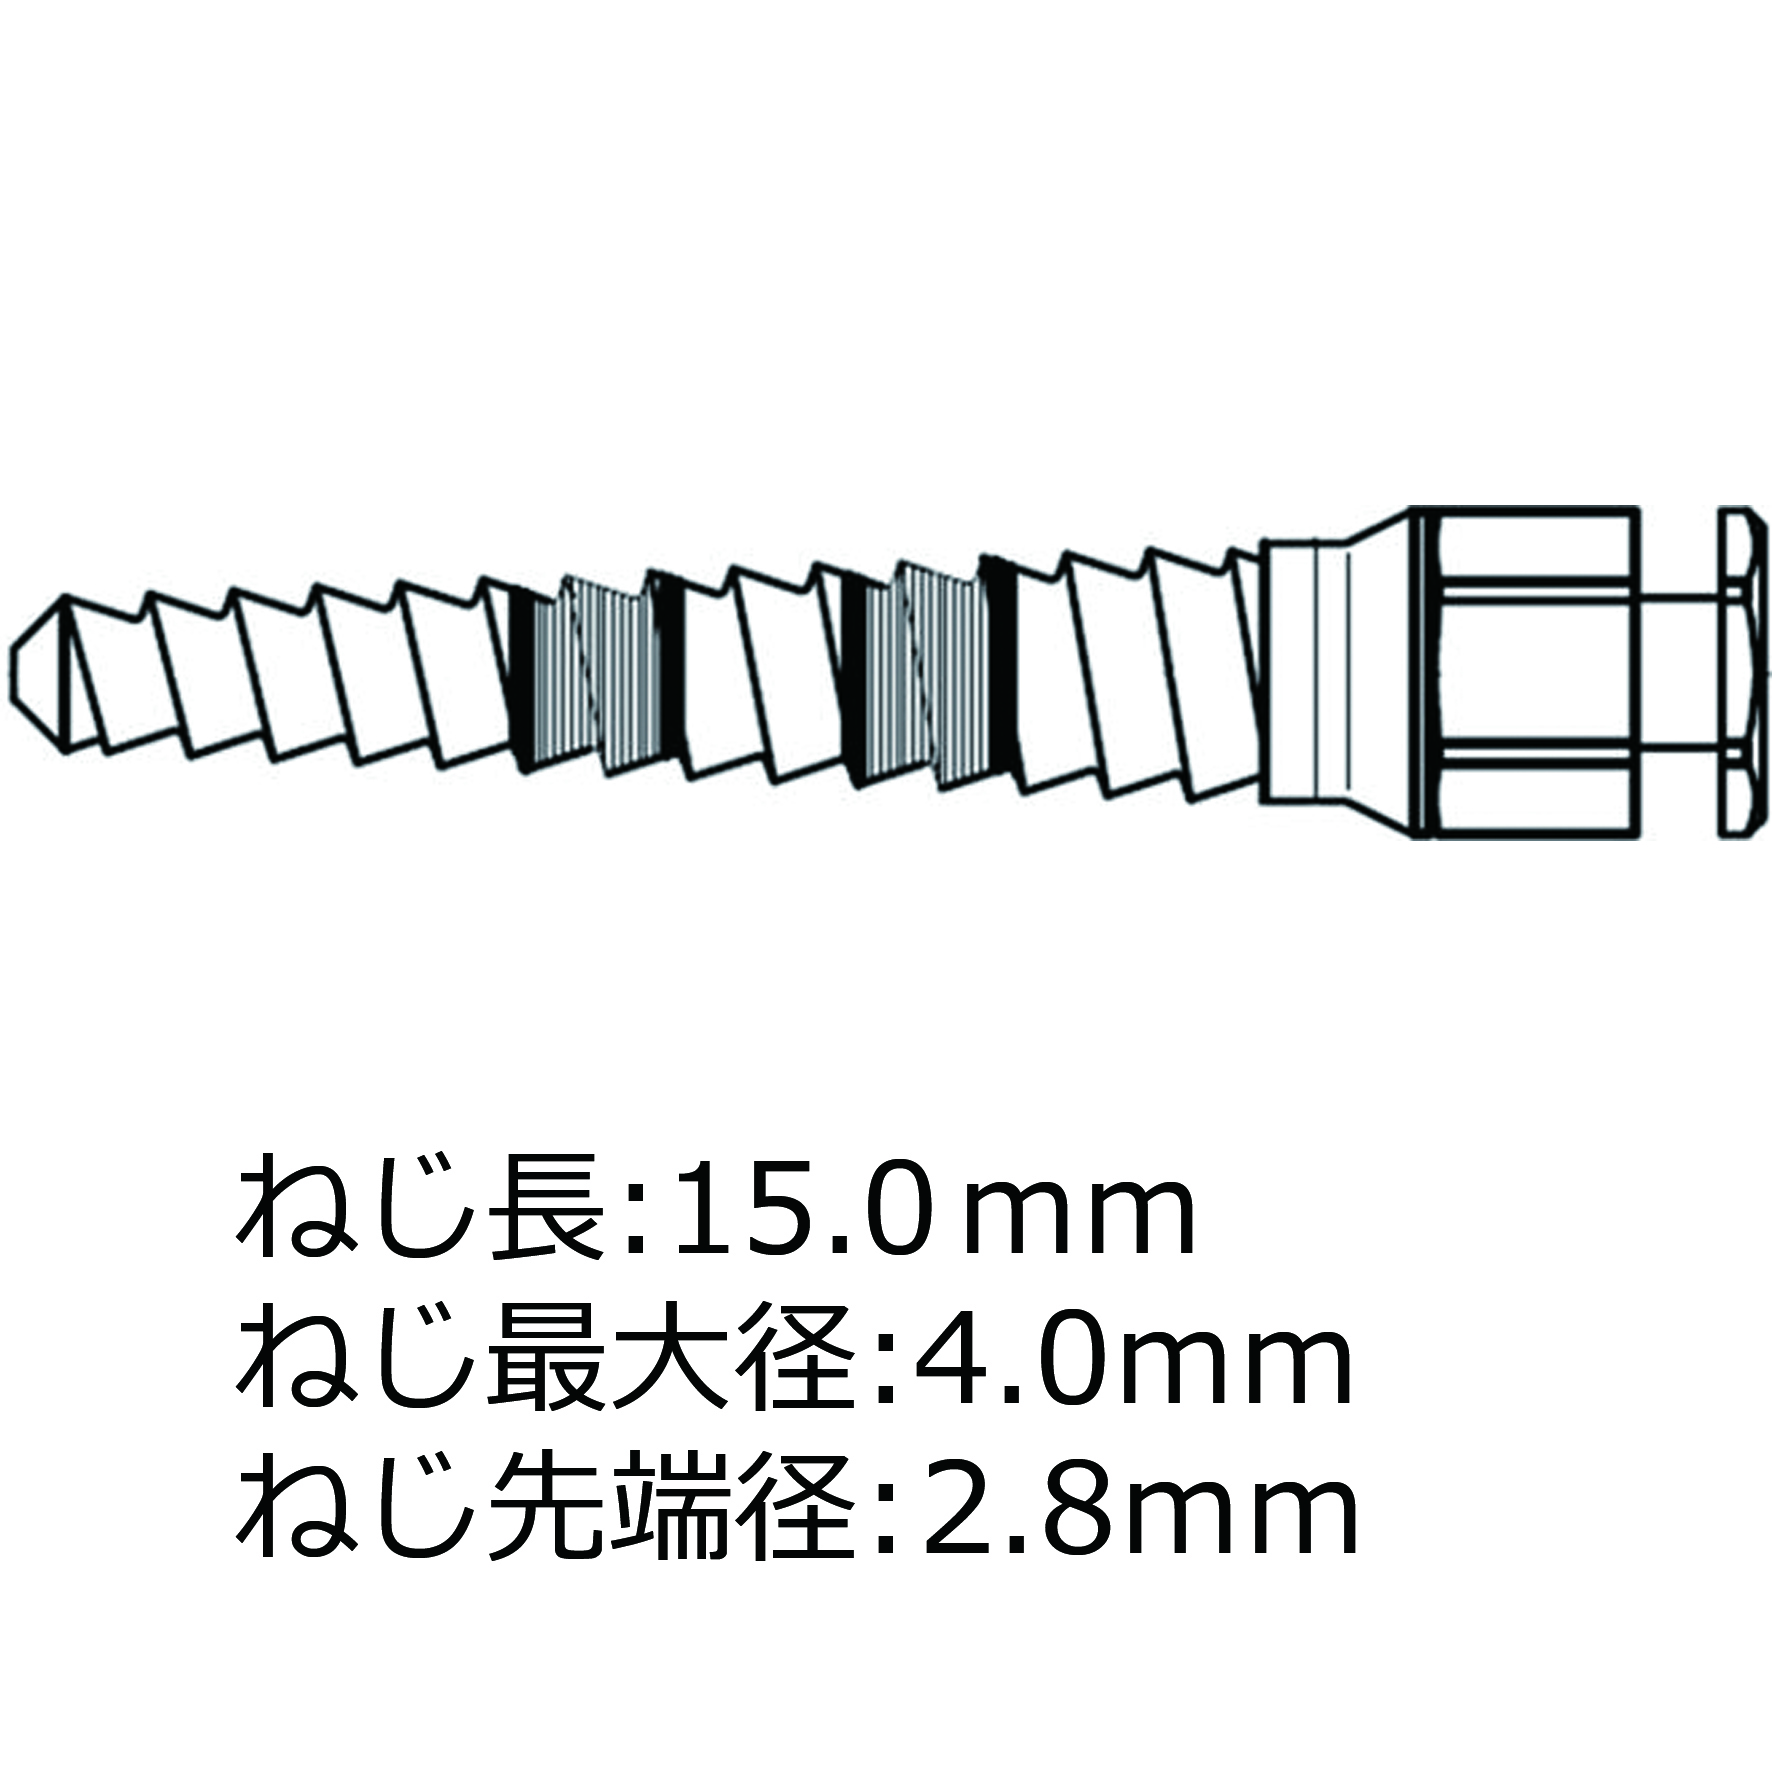 S-Cスプレッダー φ4.0mm